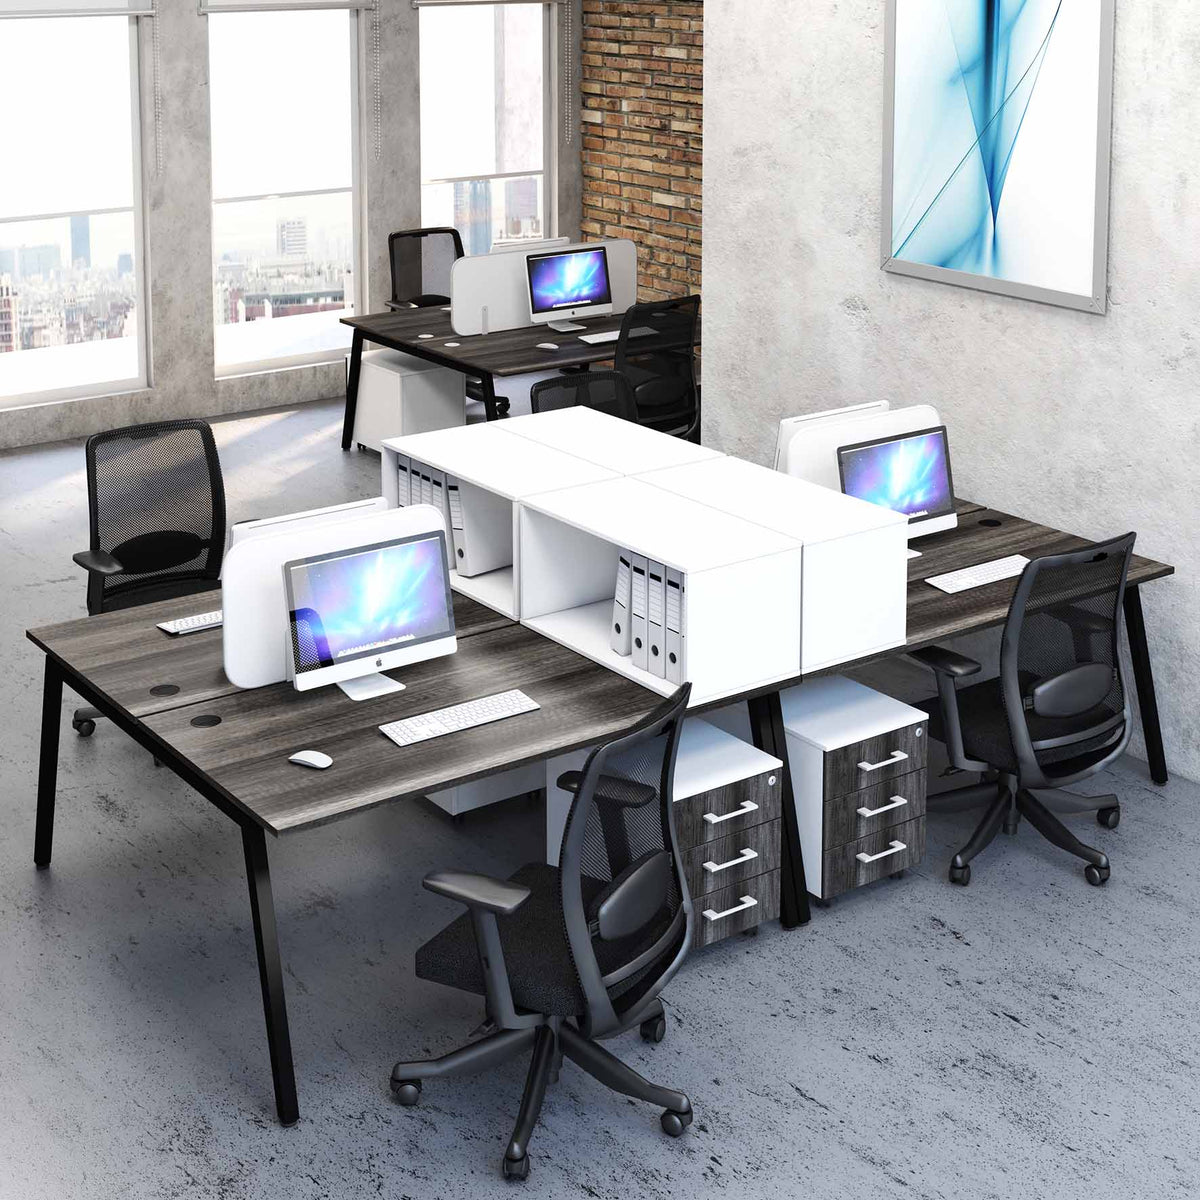 5 Benefits of Modular Desks – Desk & Chair Specialists